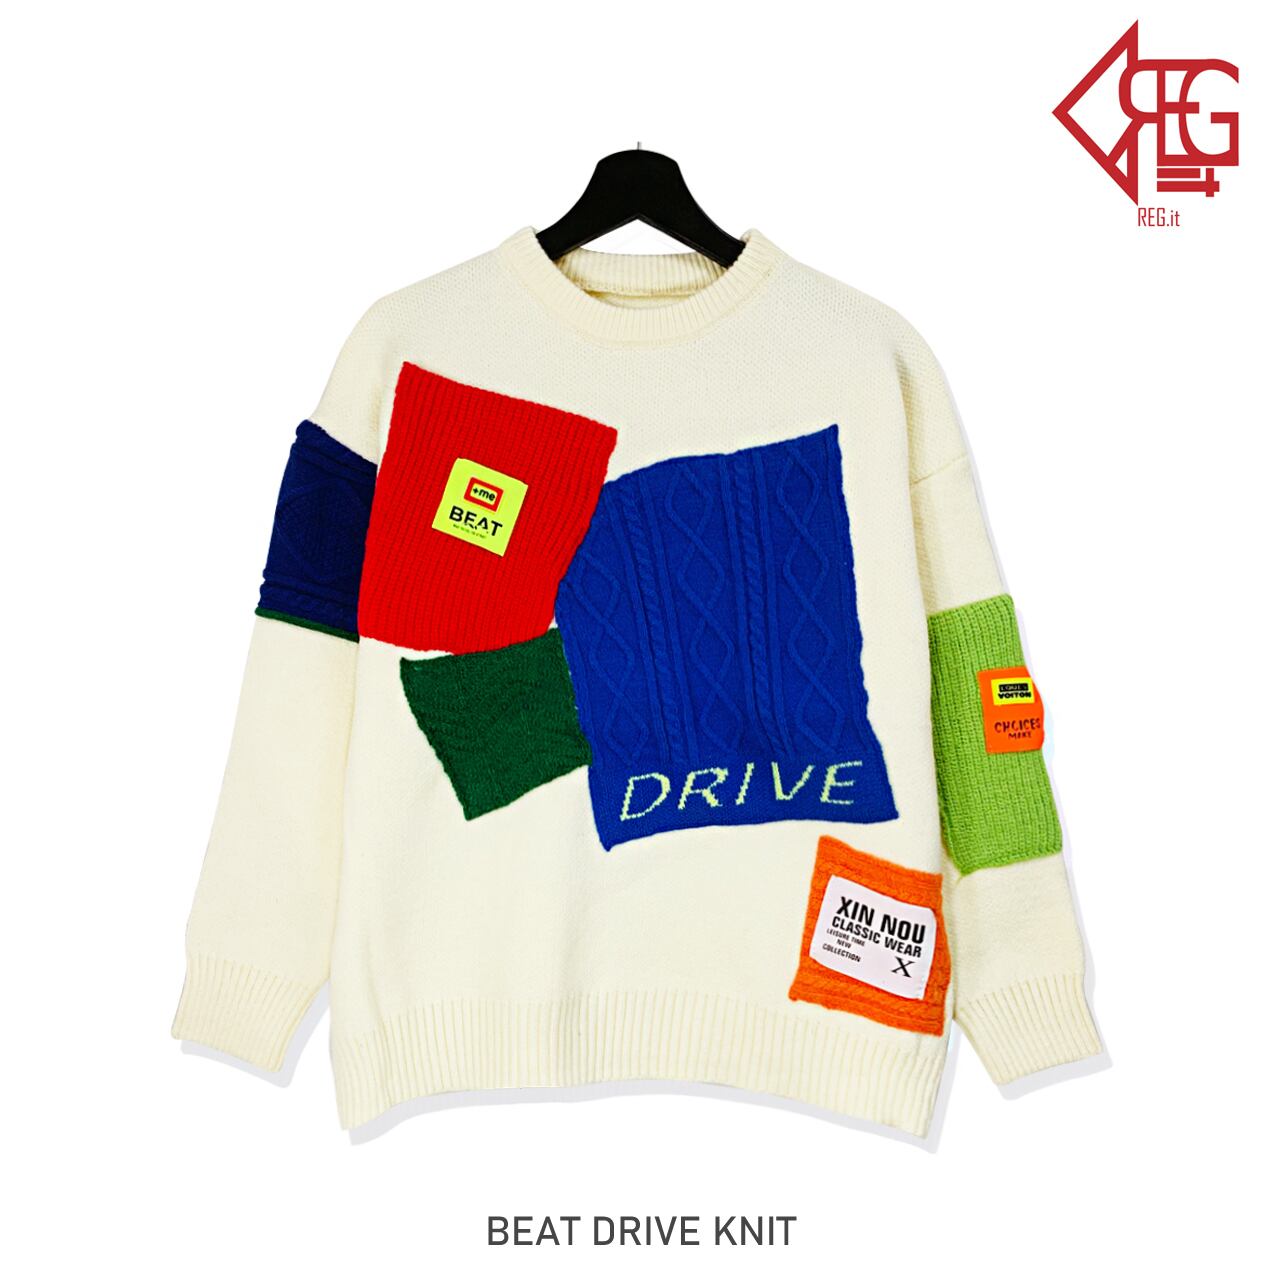 Regit 即納 Beat Drive Knit 韓国ファッション ニット おしゃれ かわいい ユニーク 個性的な ユニークなニット Regit